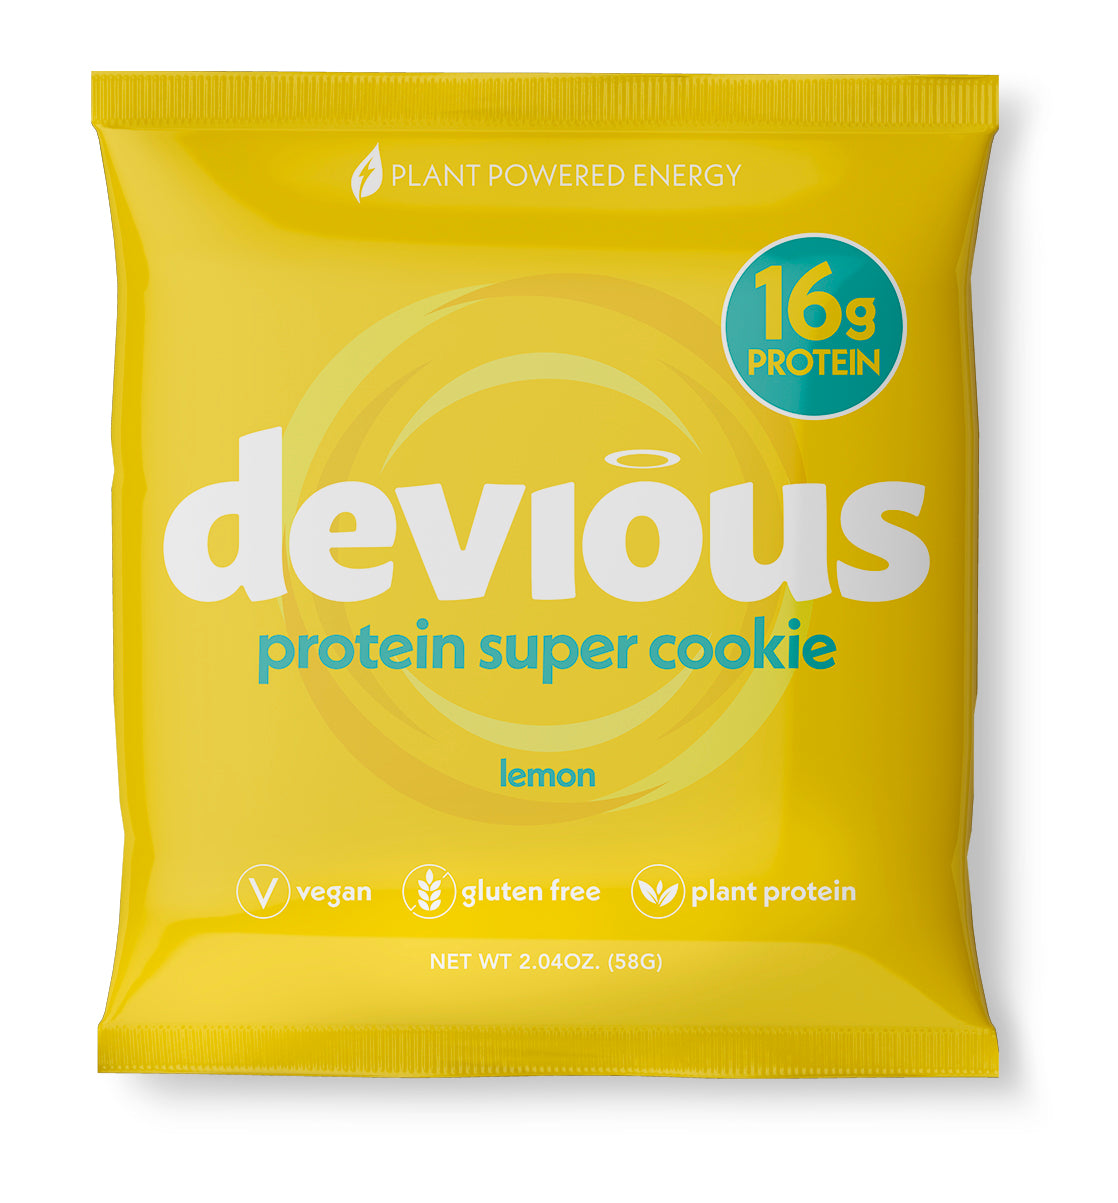 reduced sugar cookie super pack (8 pack)